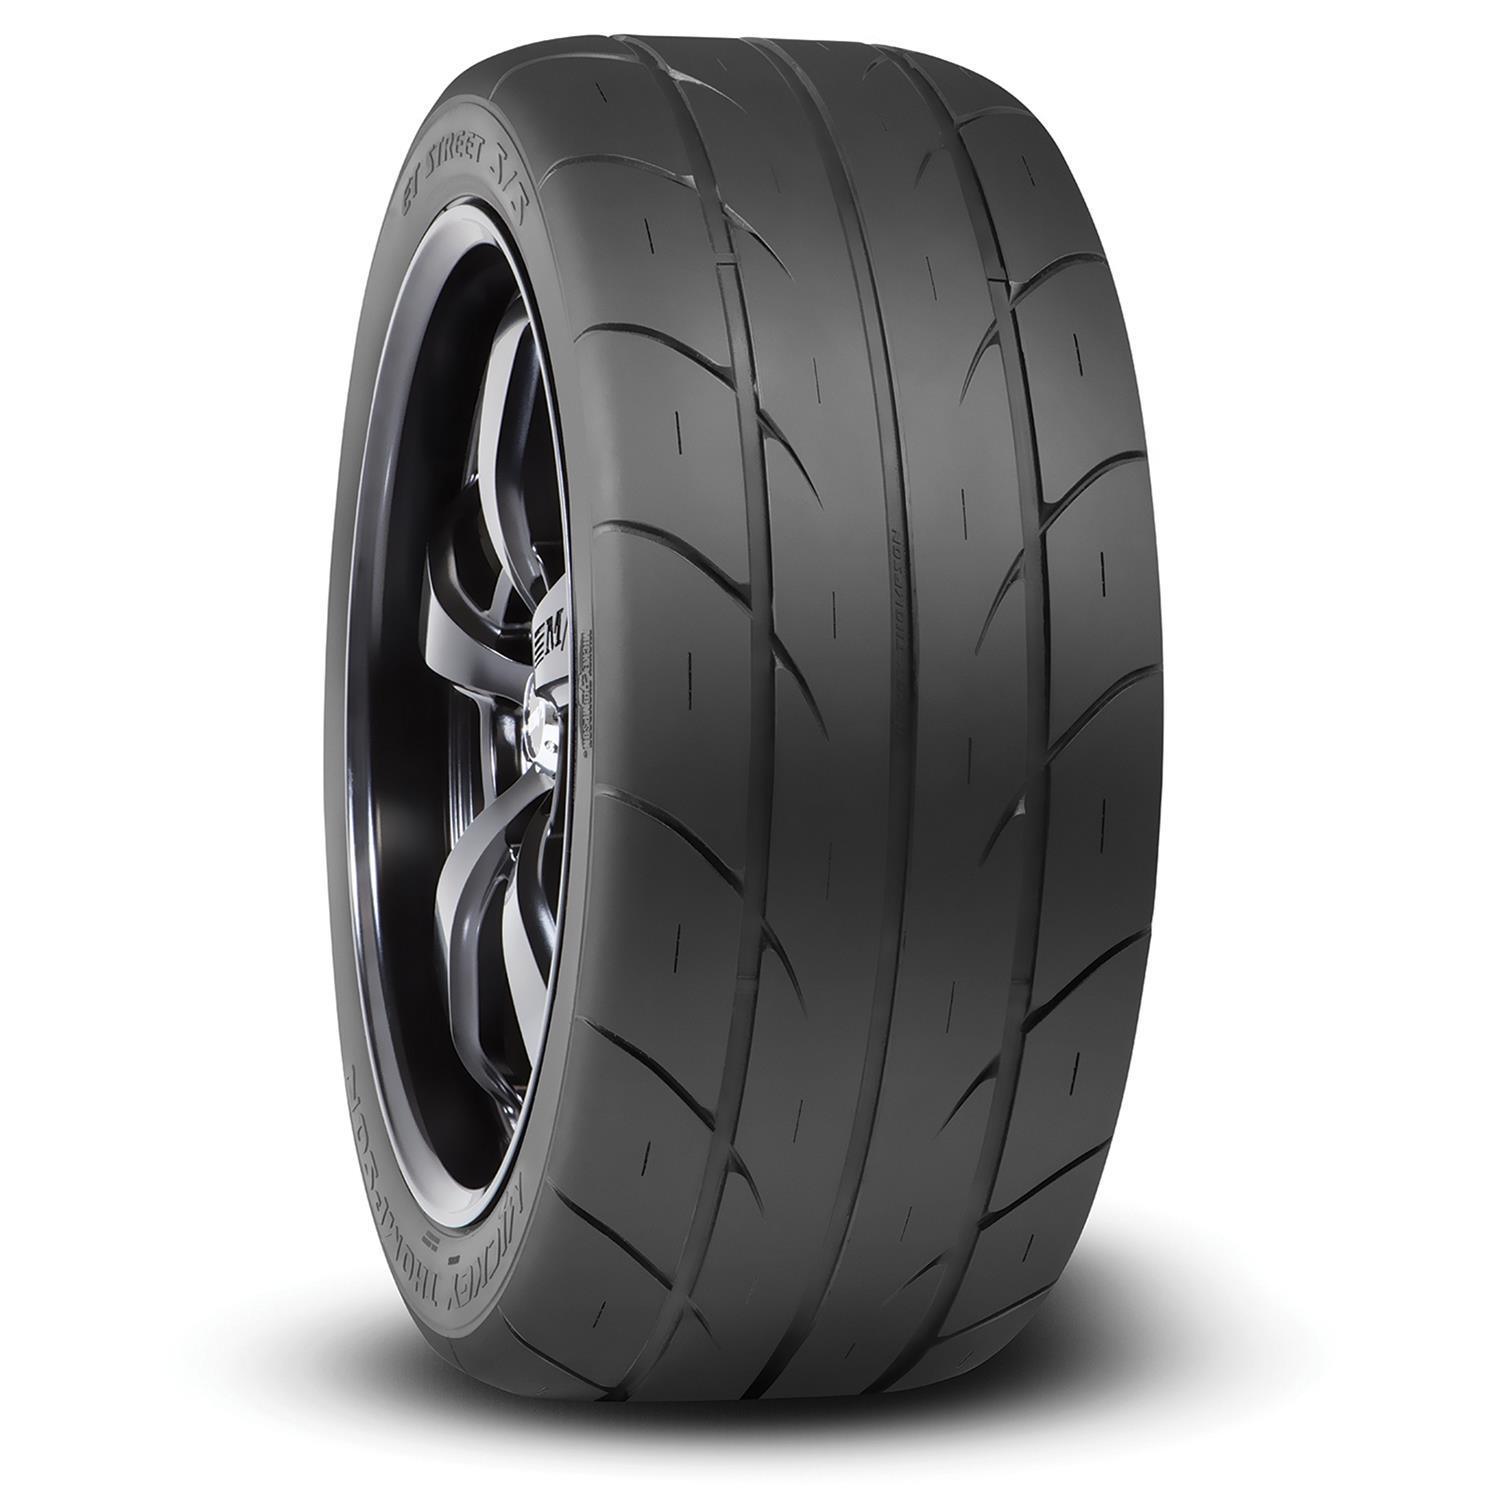 P295/65R15 ET Street S/S Tire - Burlile Performance Products